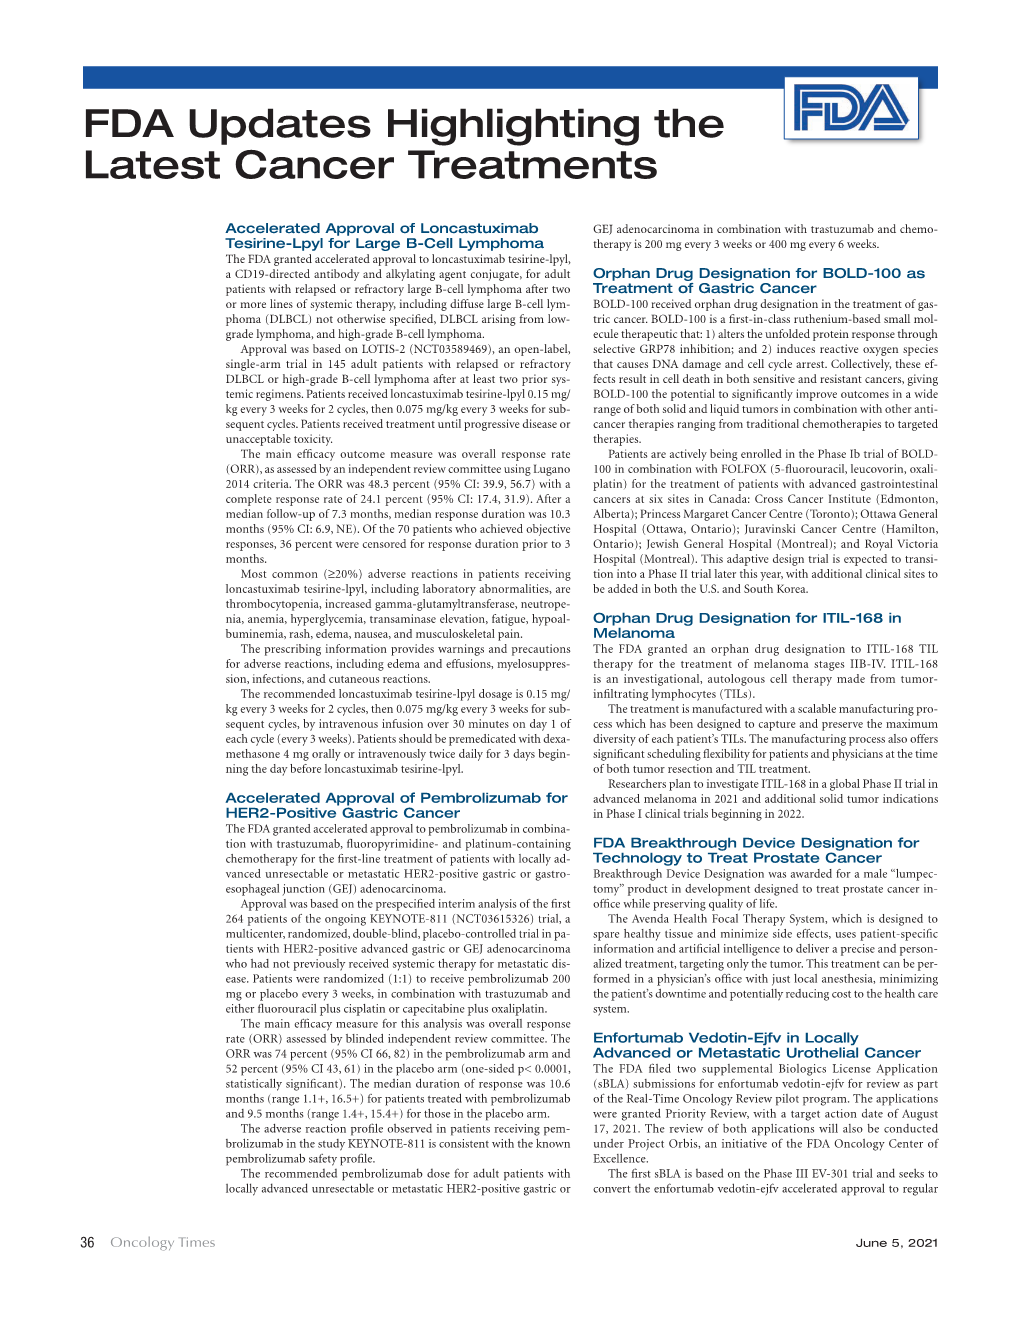 FDA Updates Highlighting the Latest Cancer Treatments